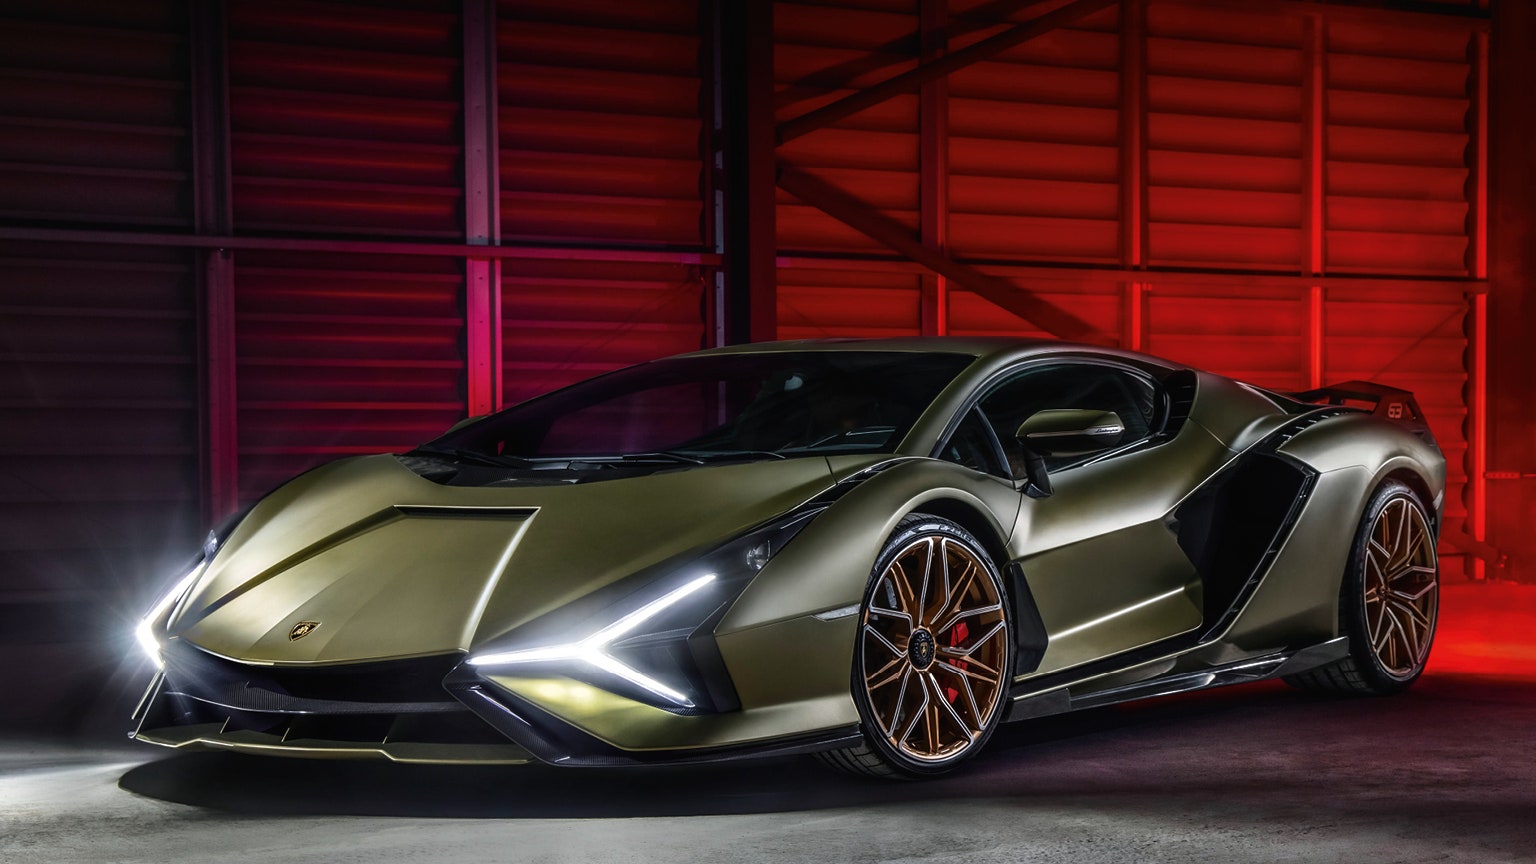 Lamborghini has finally launched its first hybrid | British GQ